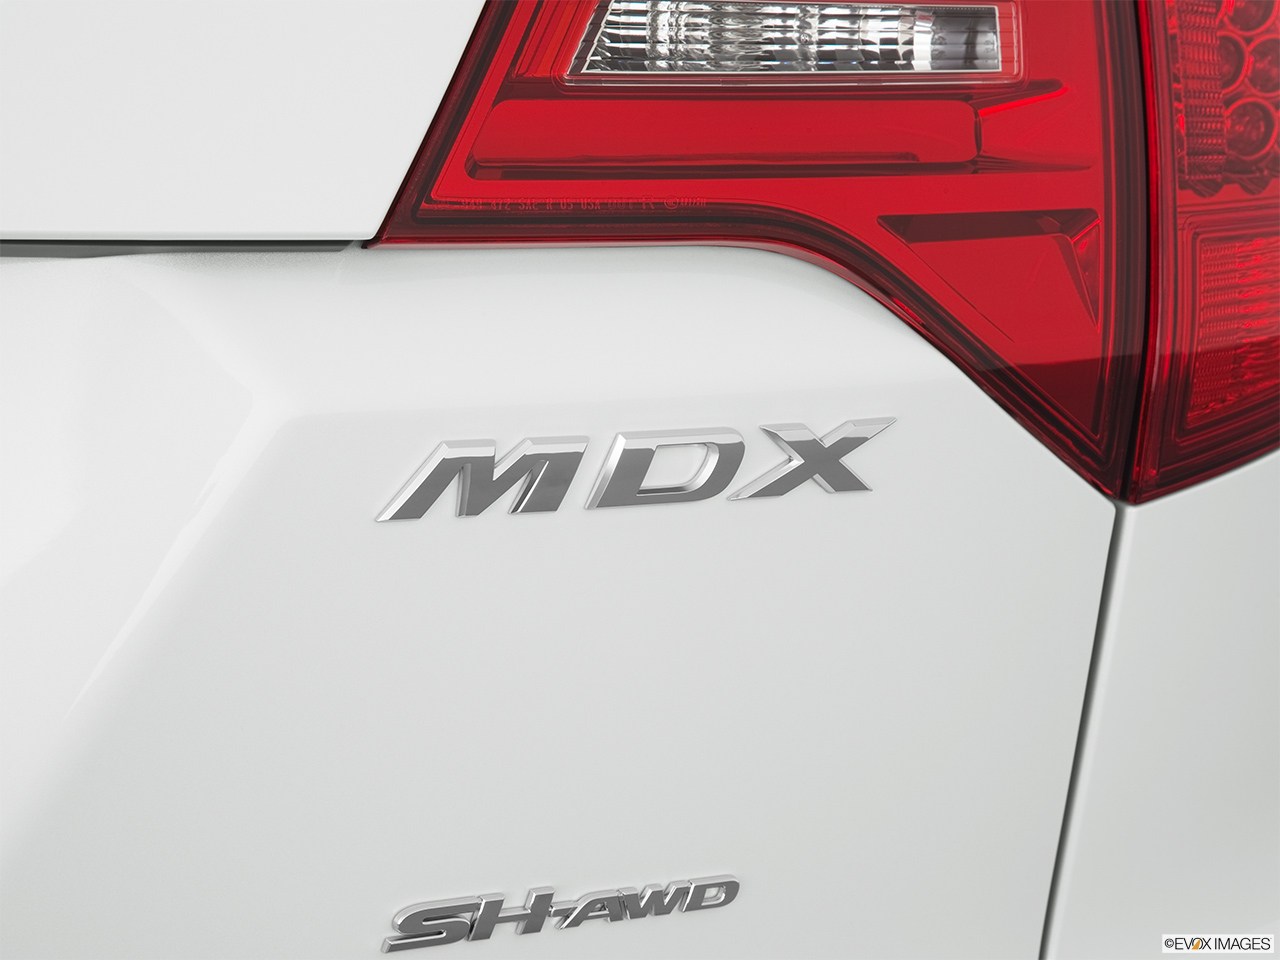 2011 Acura MDX MDX Rear model badge/emblem 